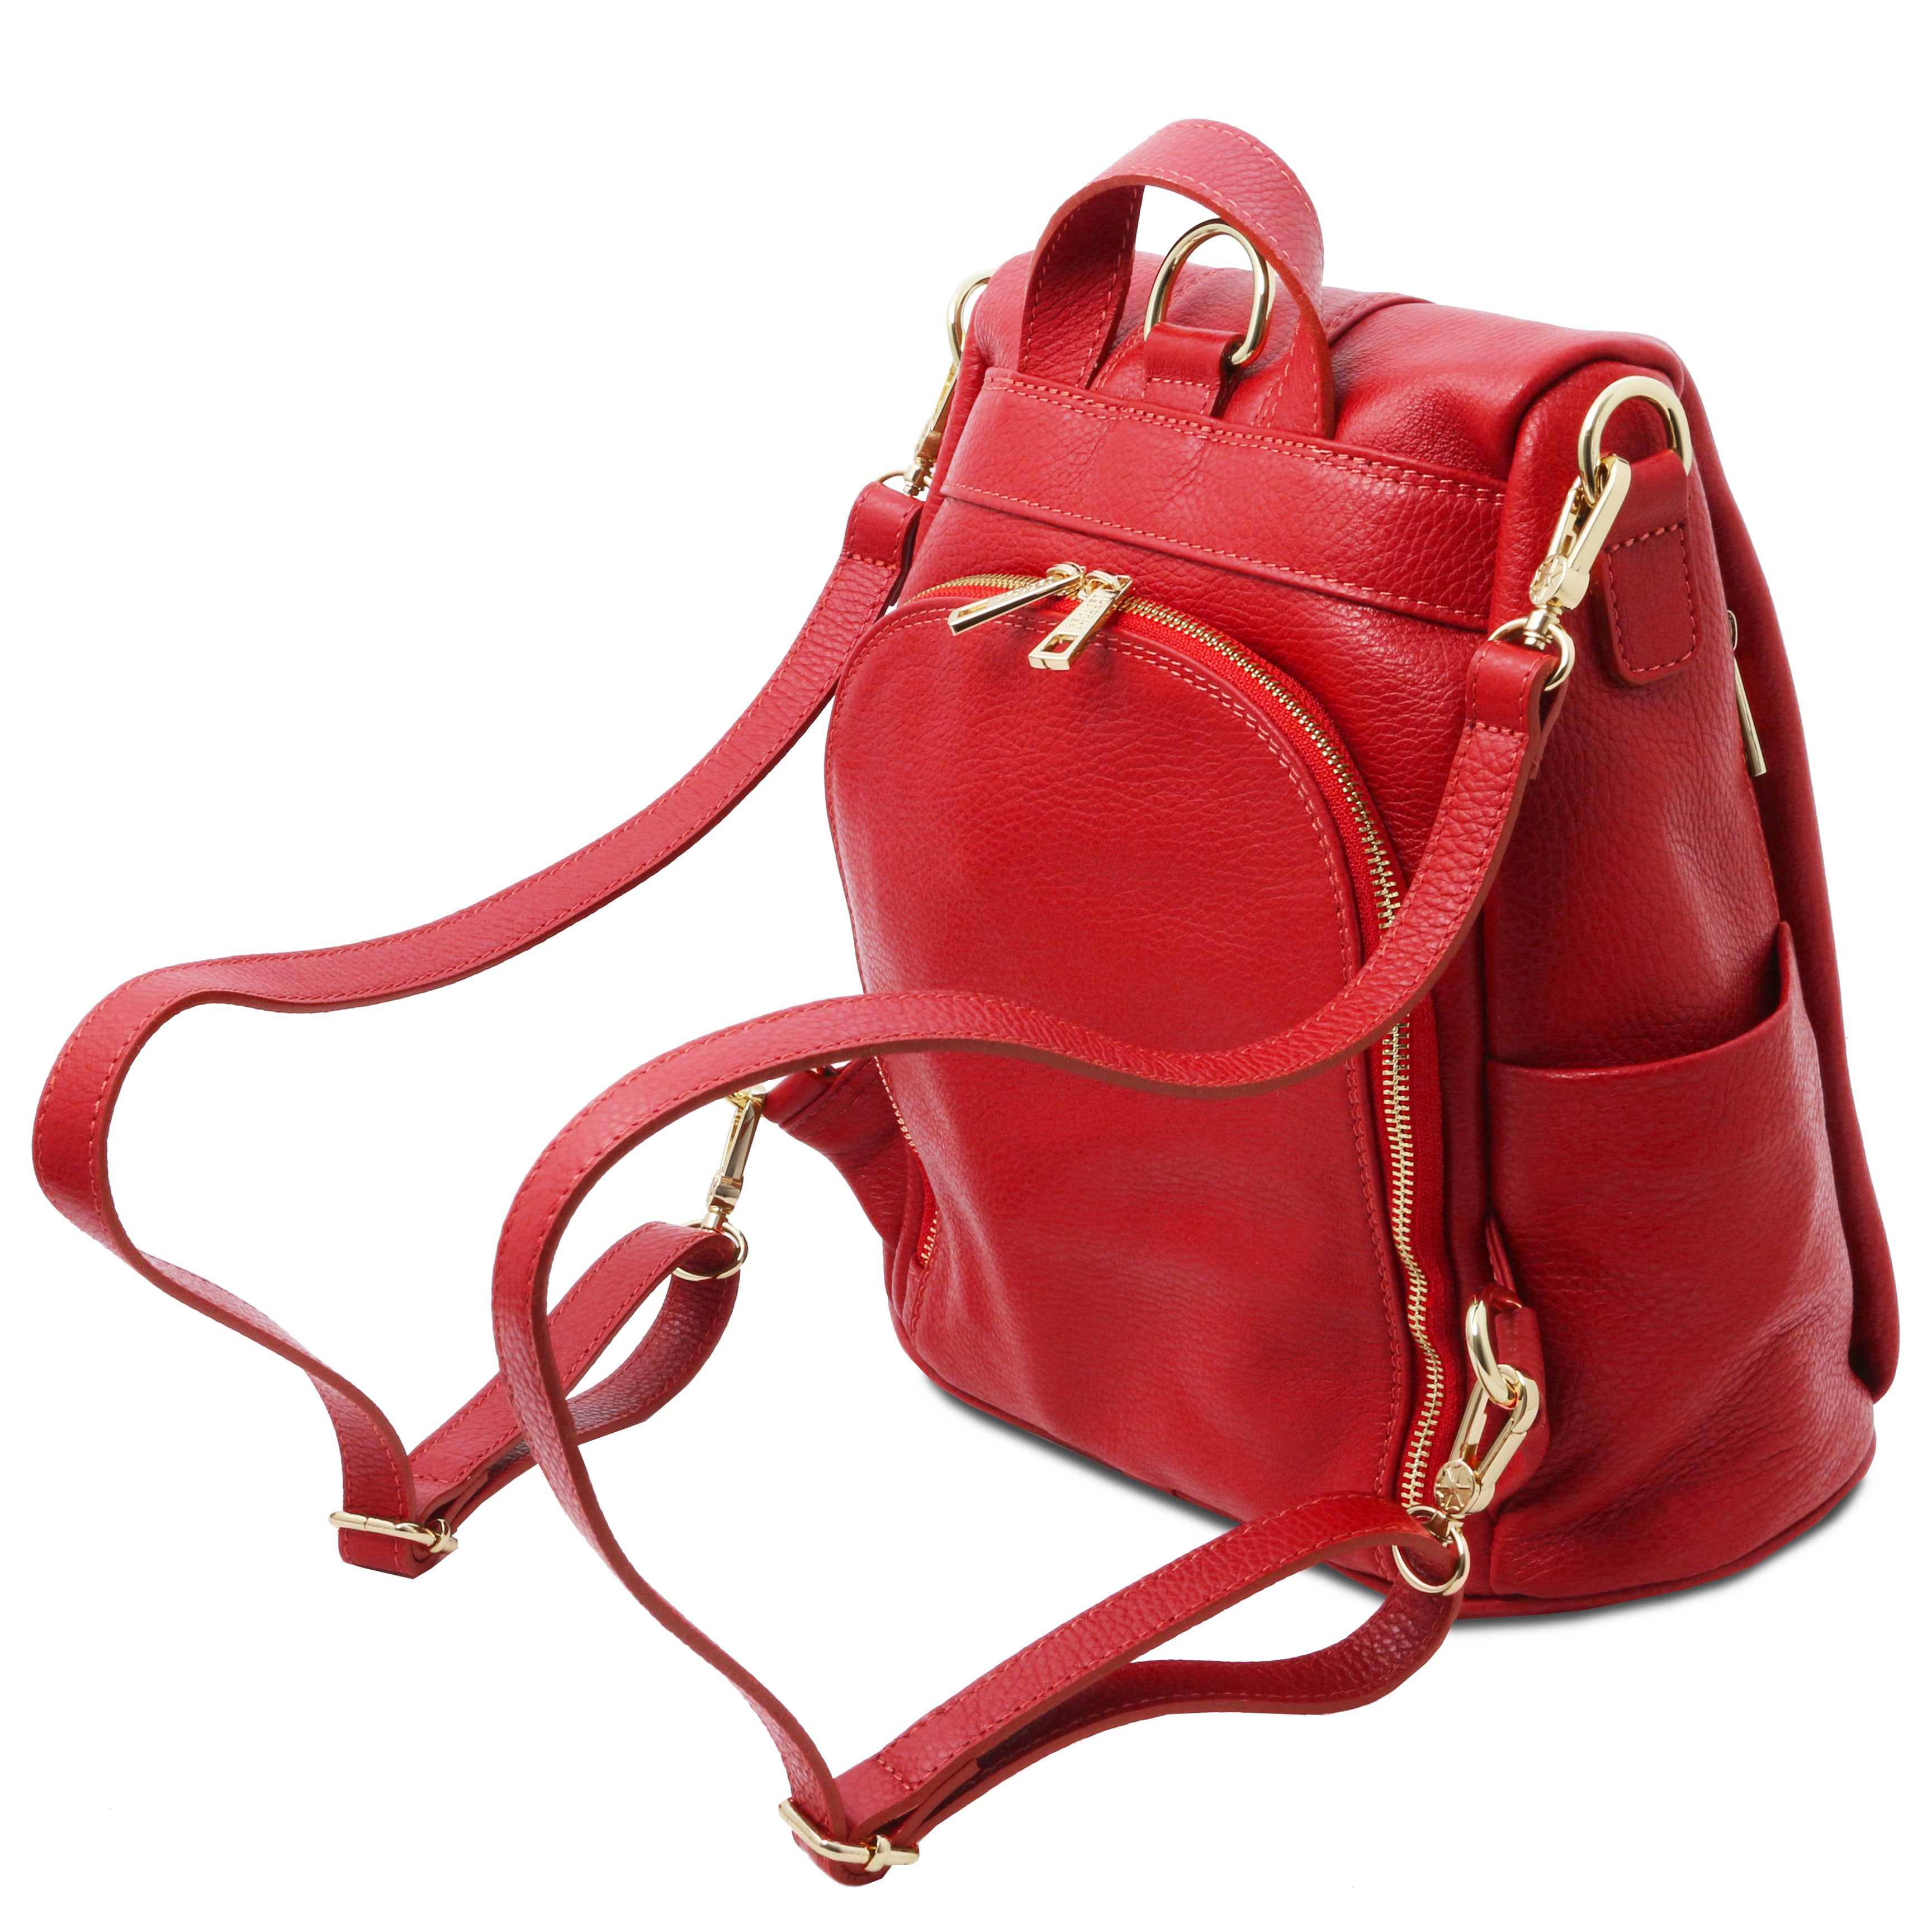 Tuscany Leather rugtas zacht leer TL Bag rood achterkant tas